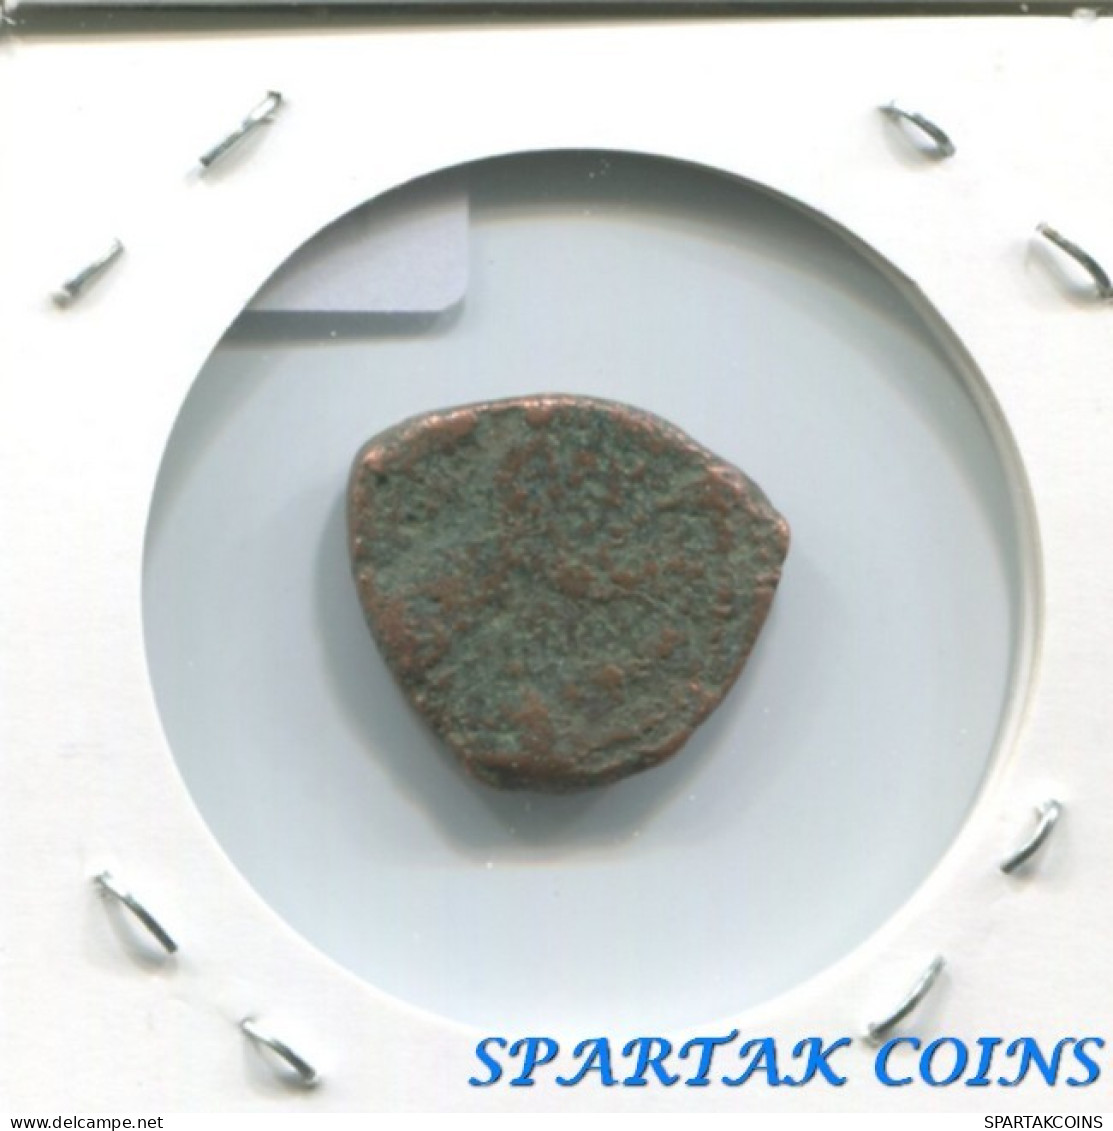 Authentic Original Ancient BYZANTINE EMPIRE Coin #E19817.4.U.A - Byzantium